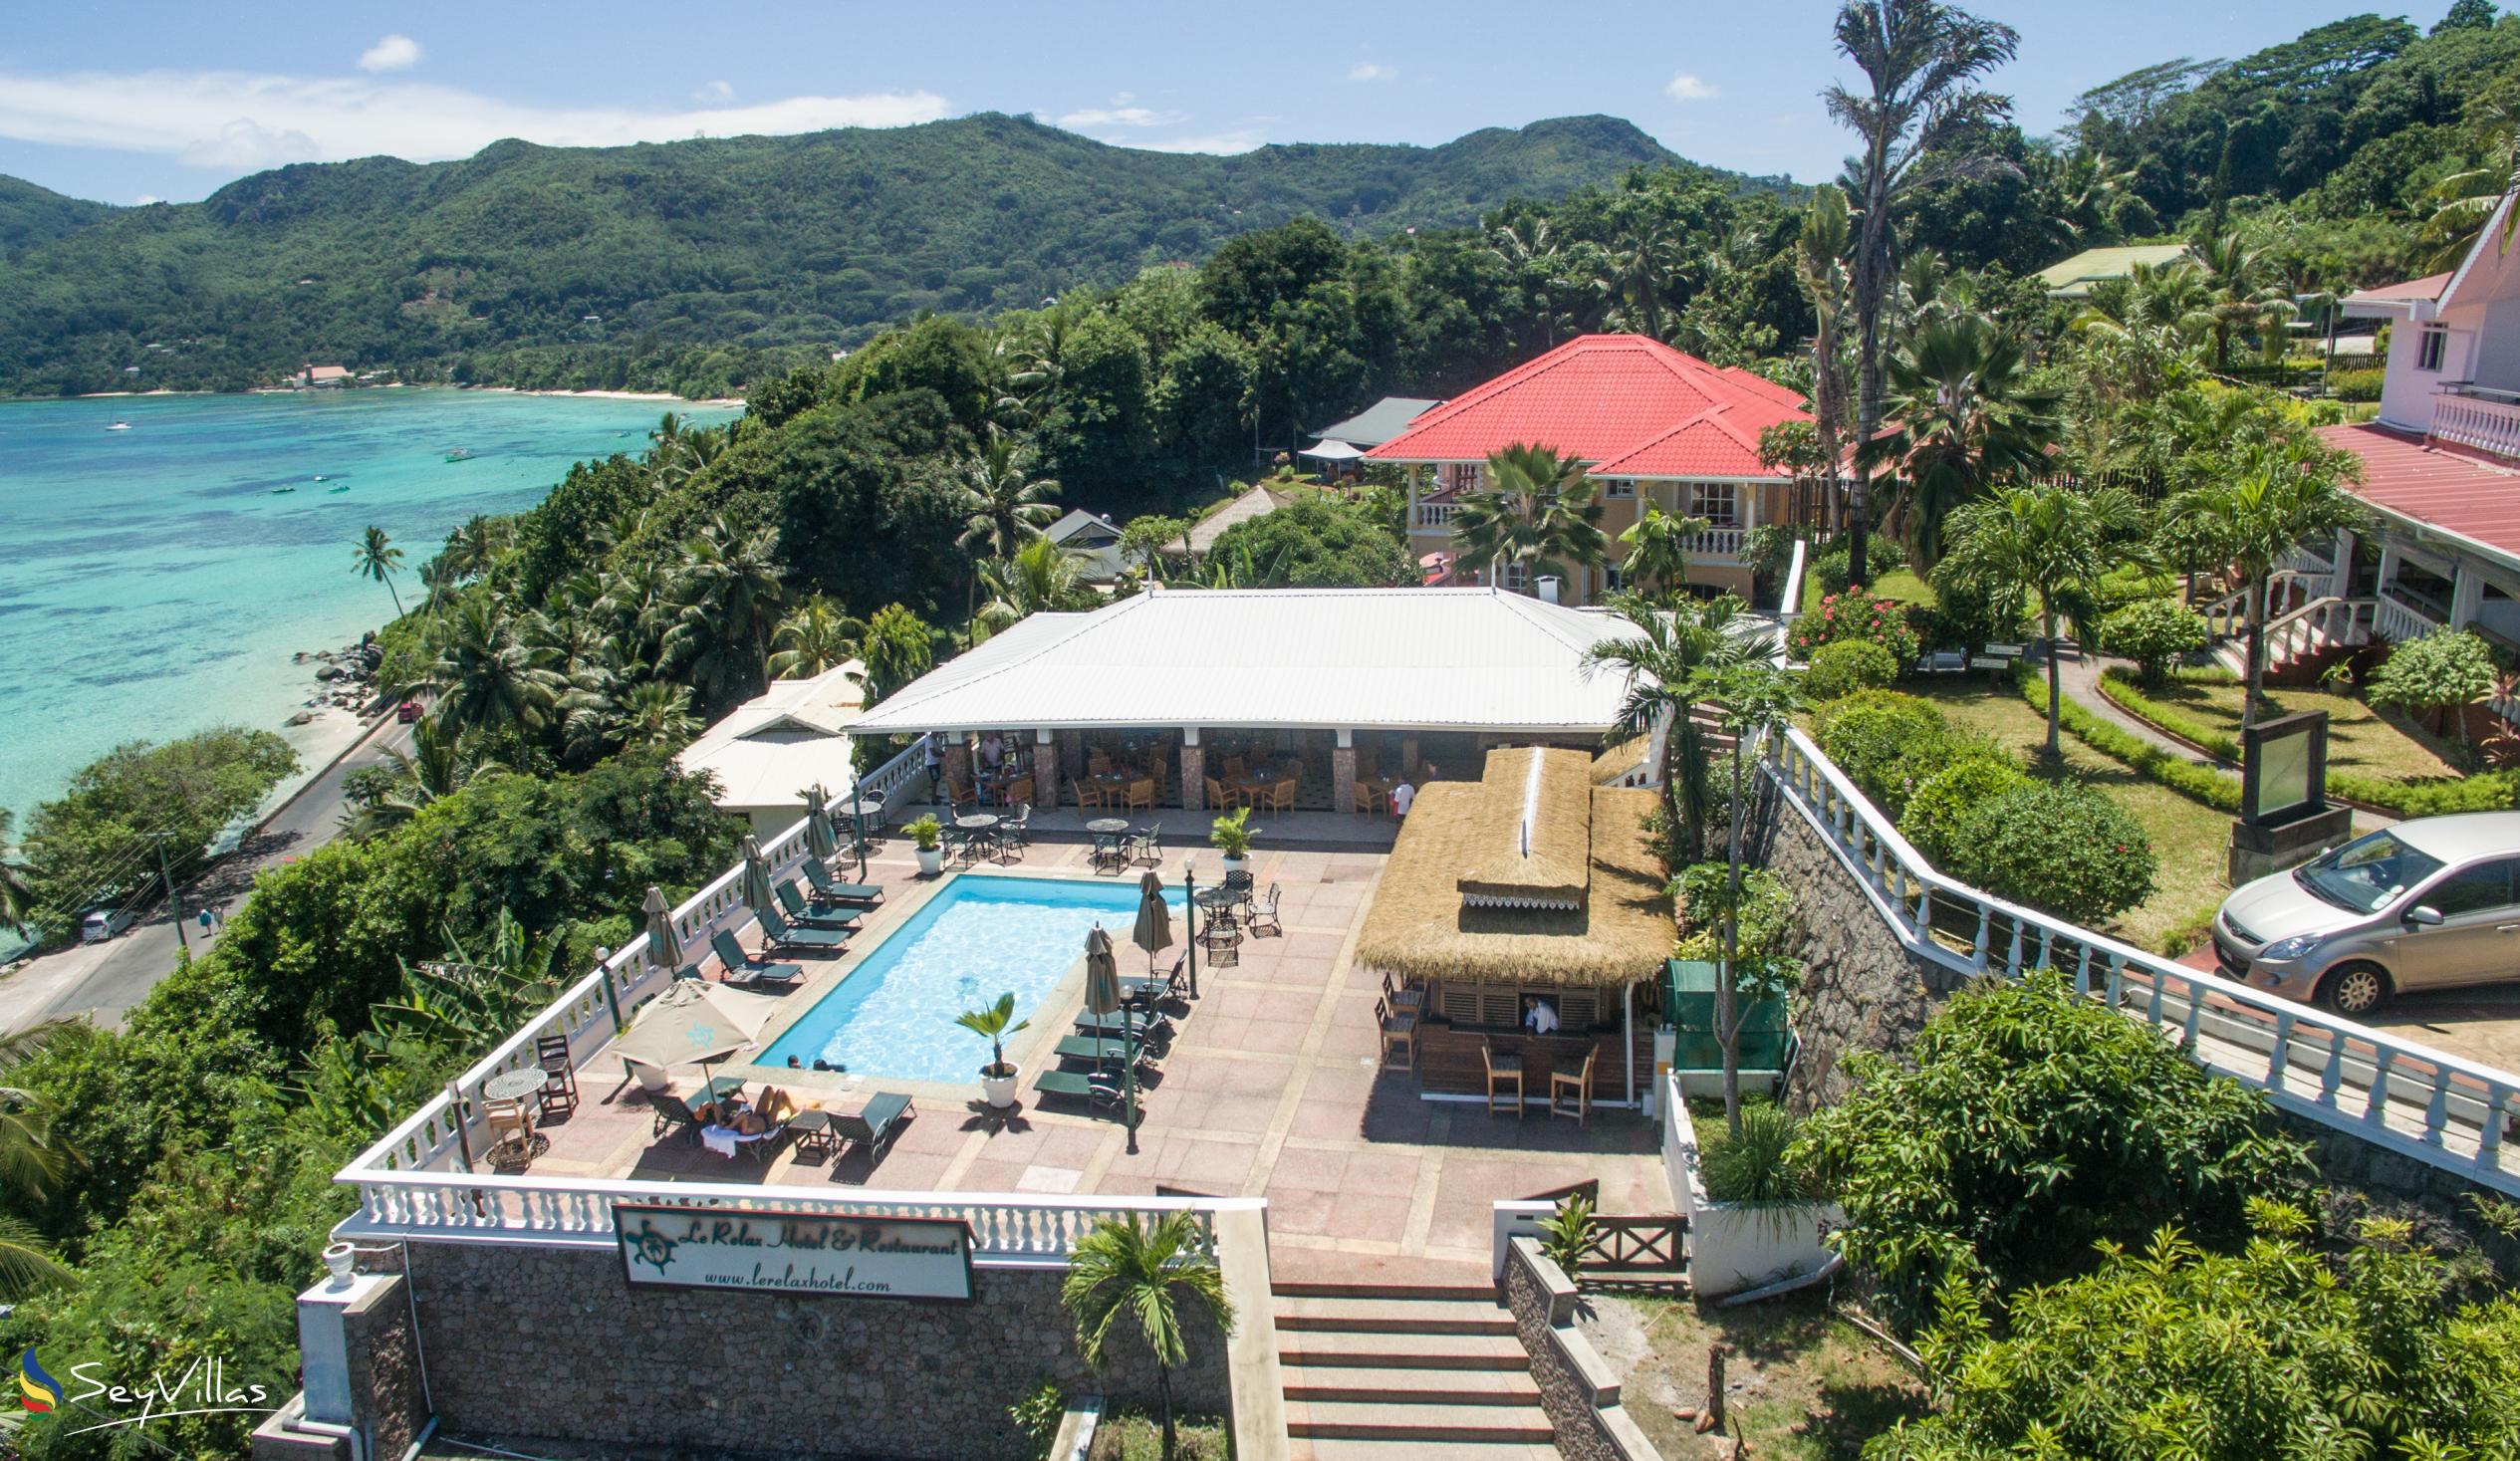 Foto 7: Le Relax Hotel & Restaurant - Aussenbereich - Mahé (Seychellen)